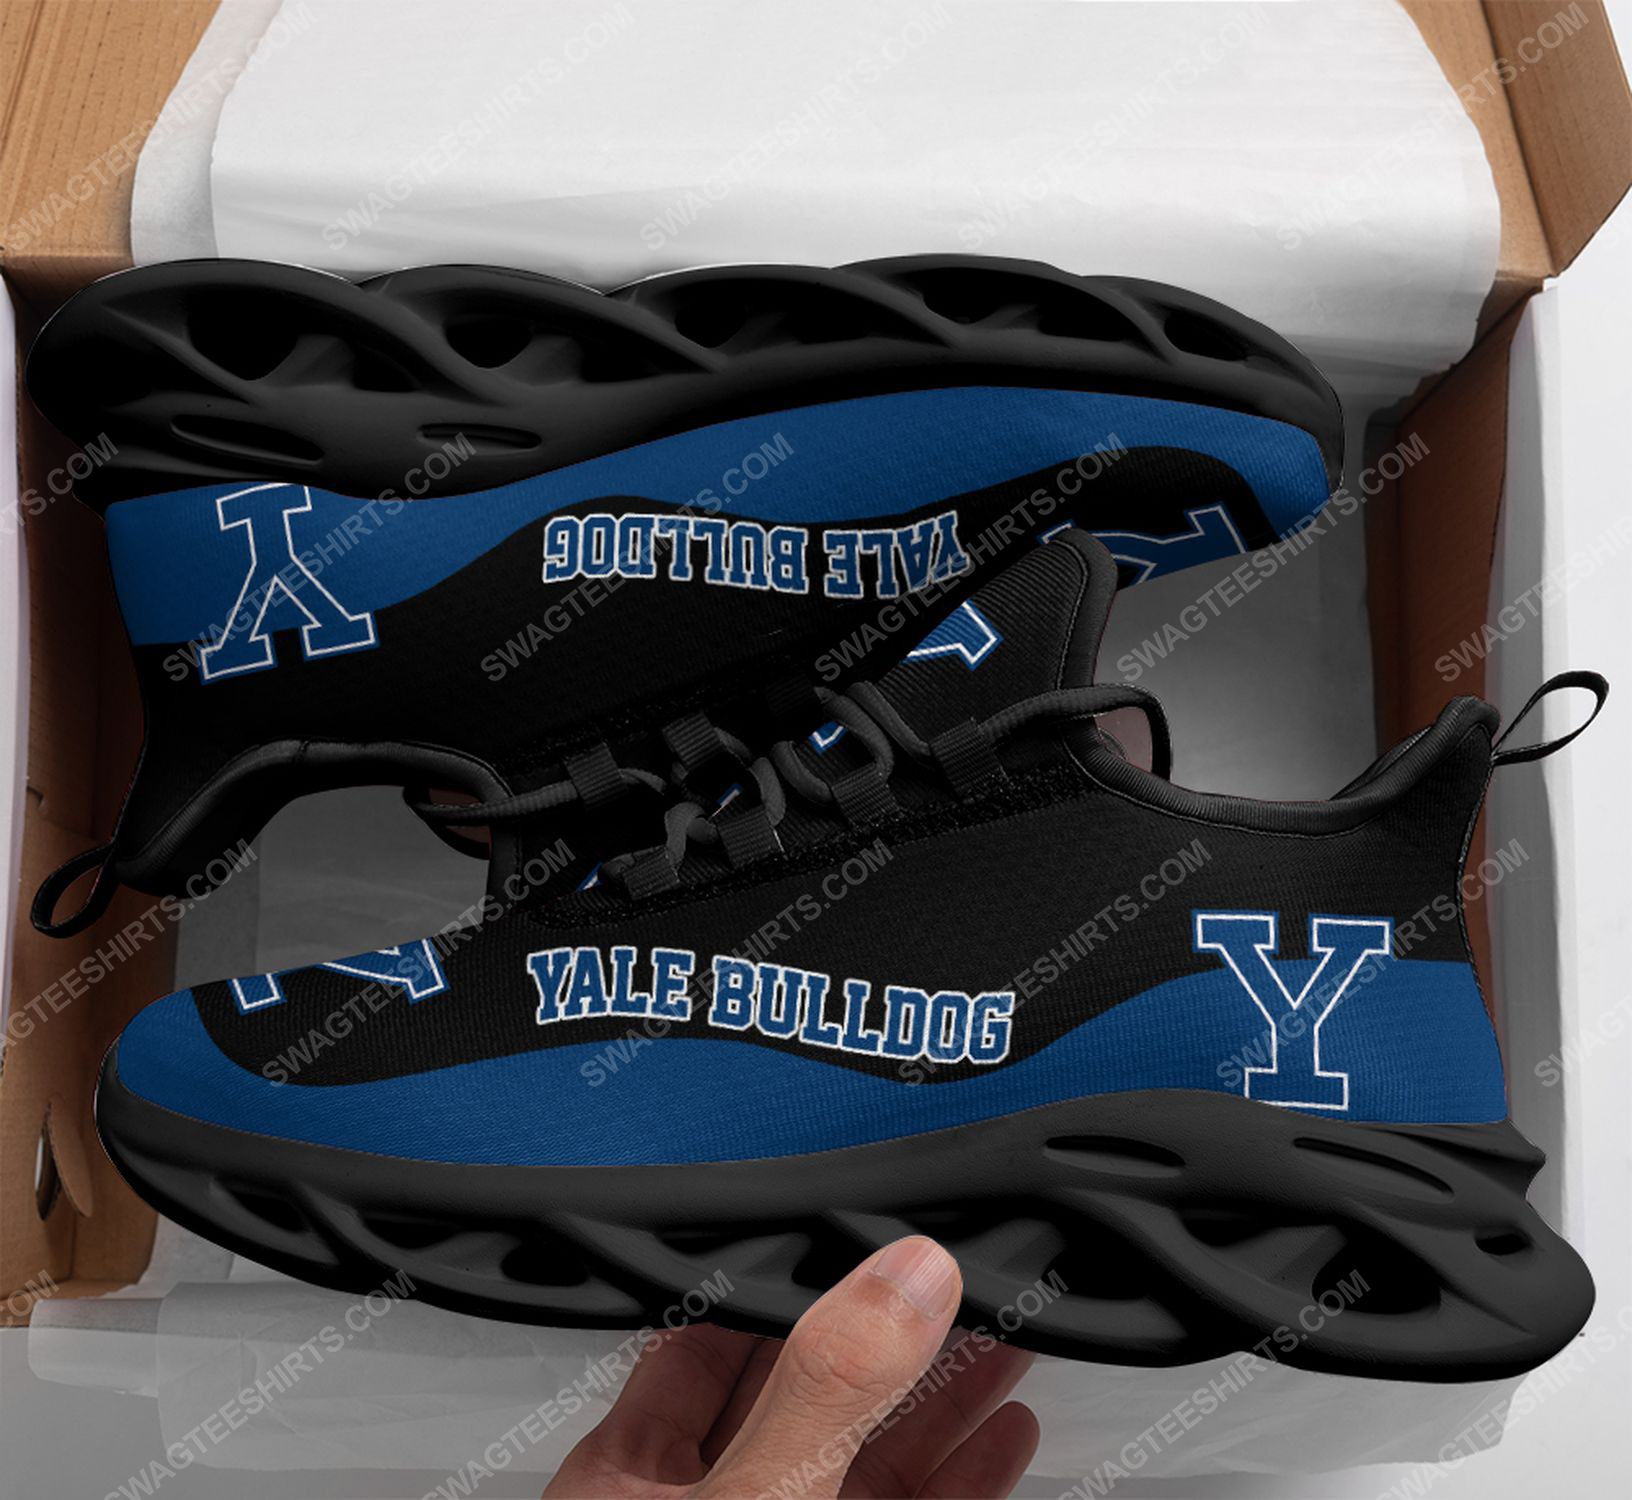 Yale bulldogs football team max soul shoes 3